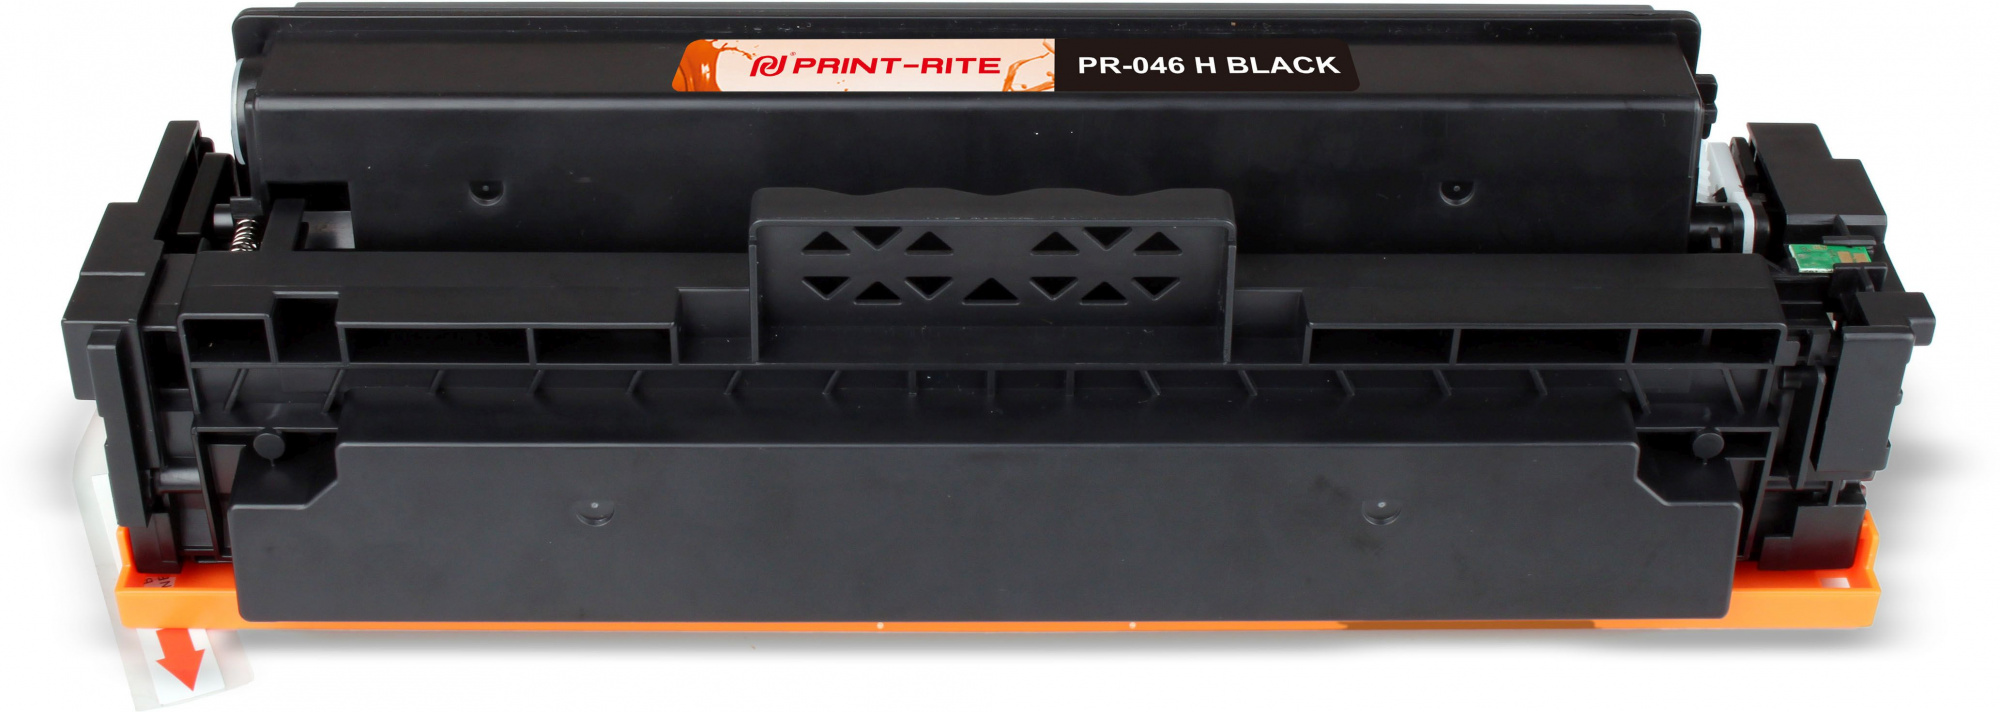 Тонер-картридж PRINT-RITE 046 H Лазерный Черный 6300стр, PR-046 H BLACK